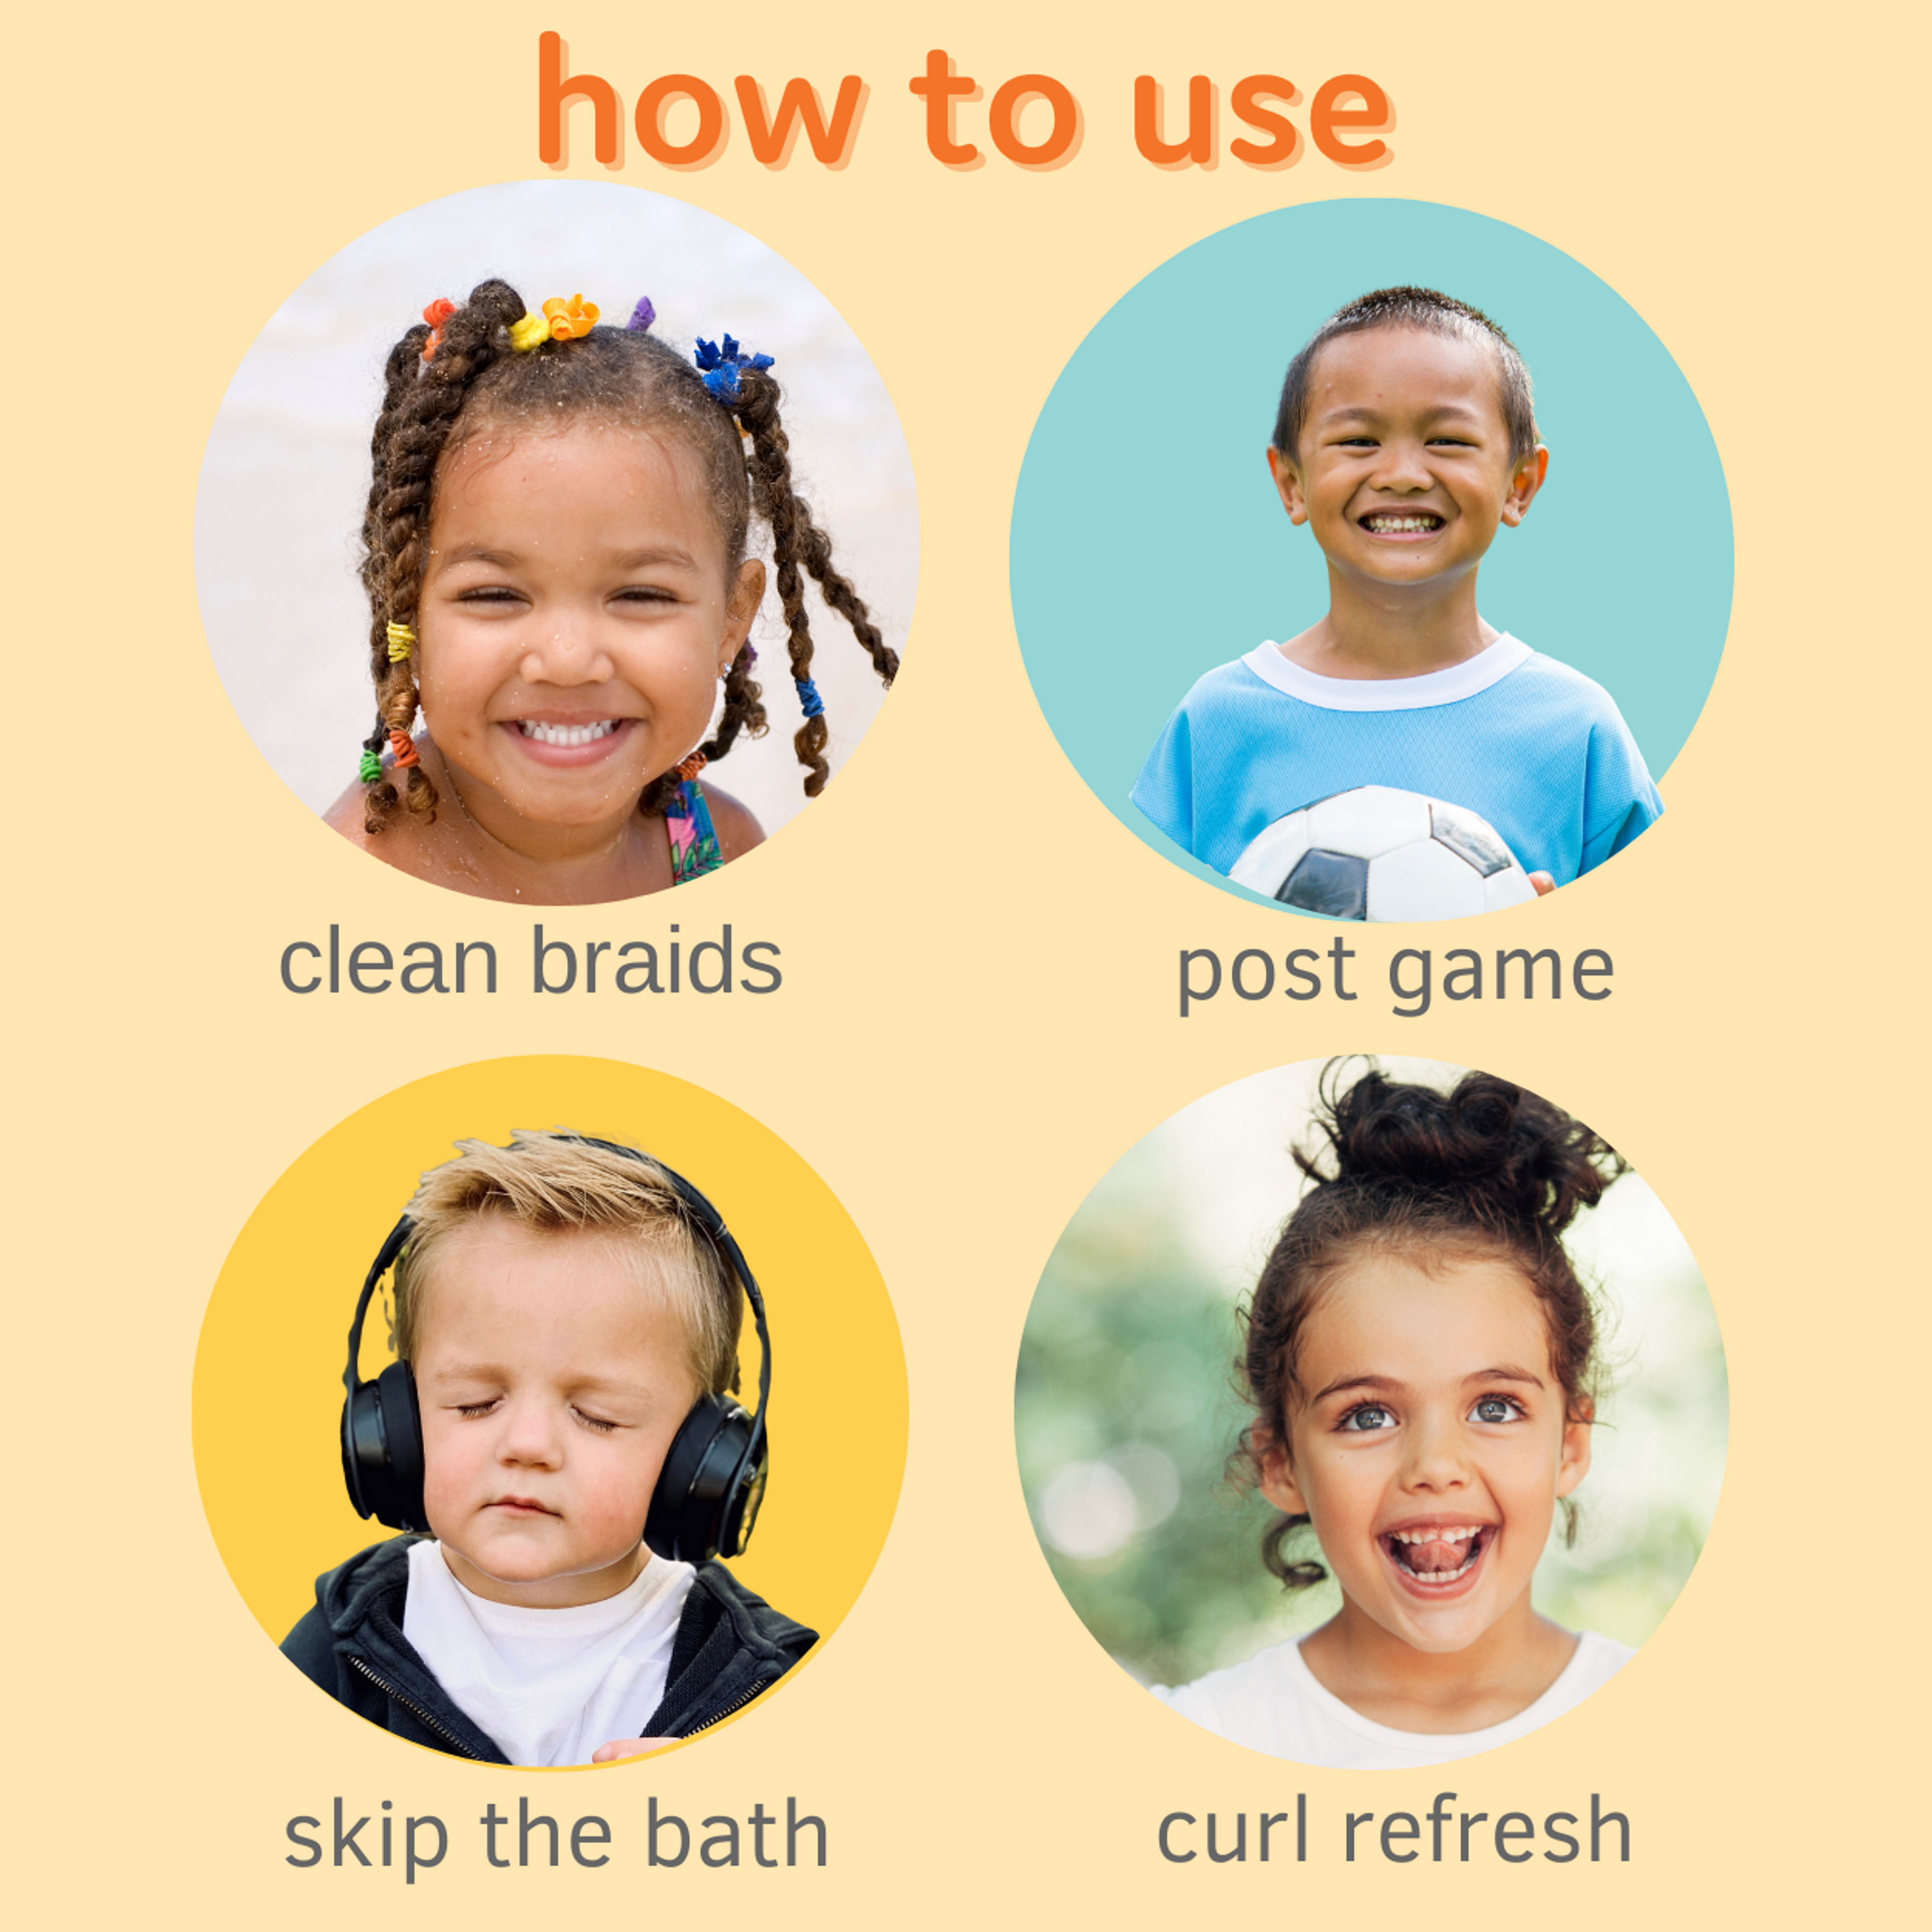 Kids Powder Dry Shampoo - Water-Free Hair Cleansing